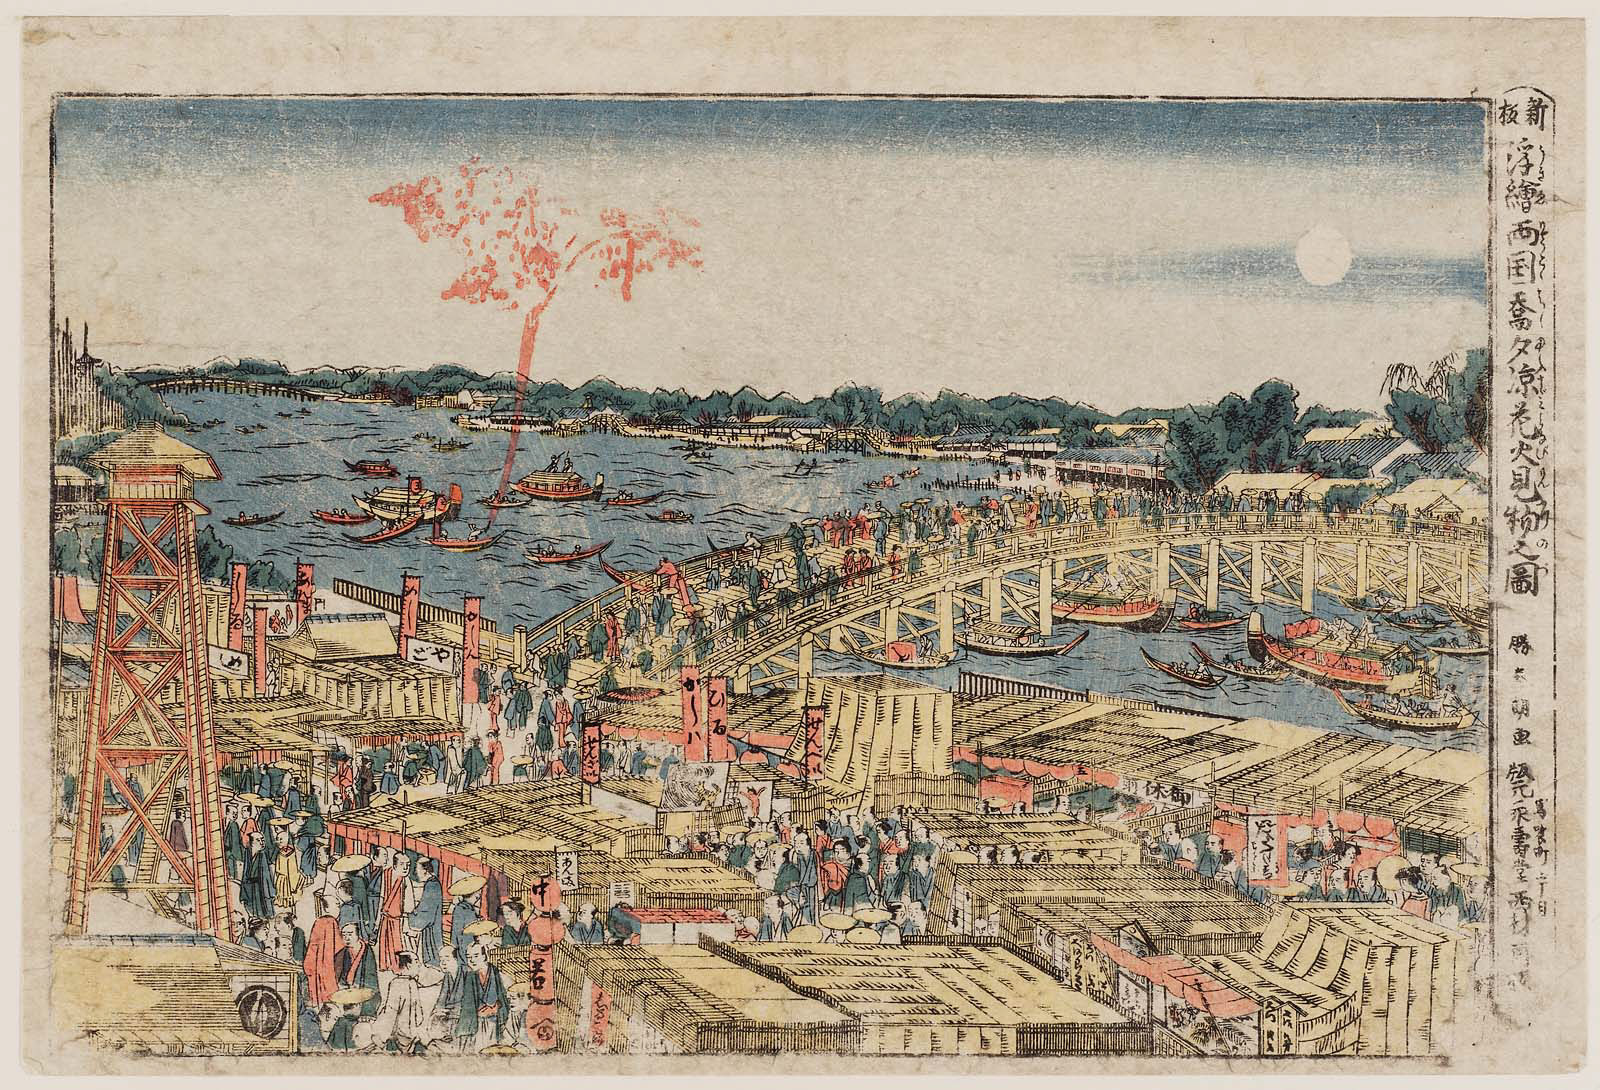 Fireworks at Ryogoku Bridge by Hokusai c1790